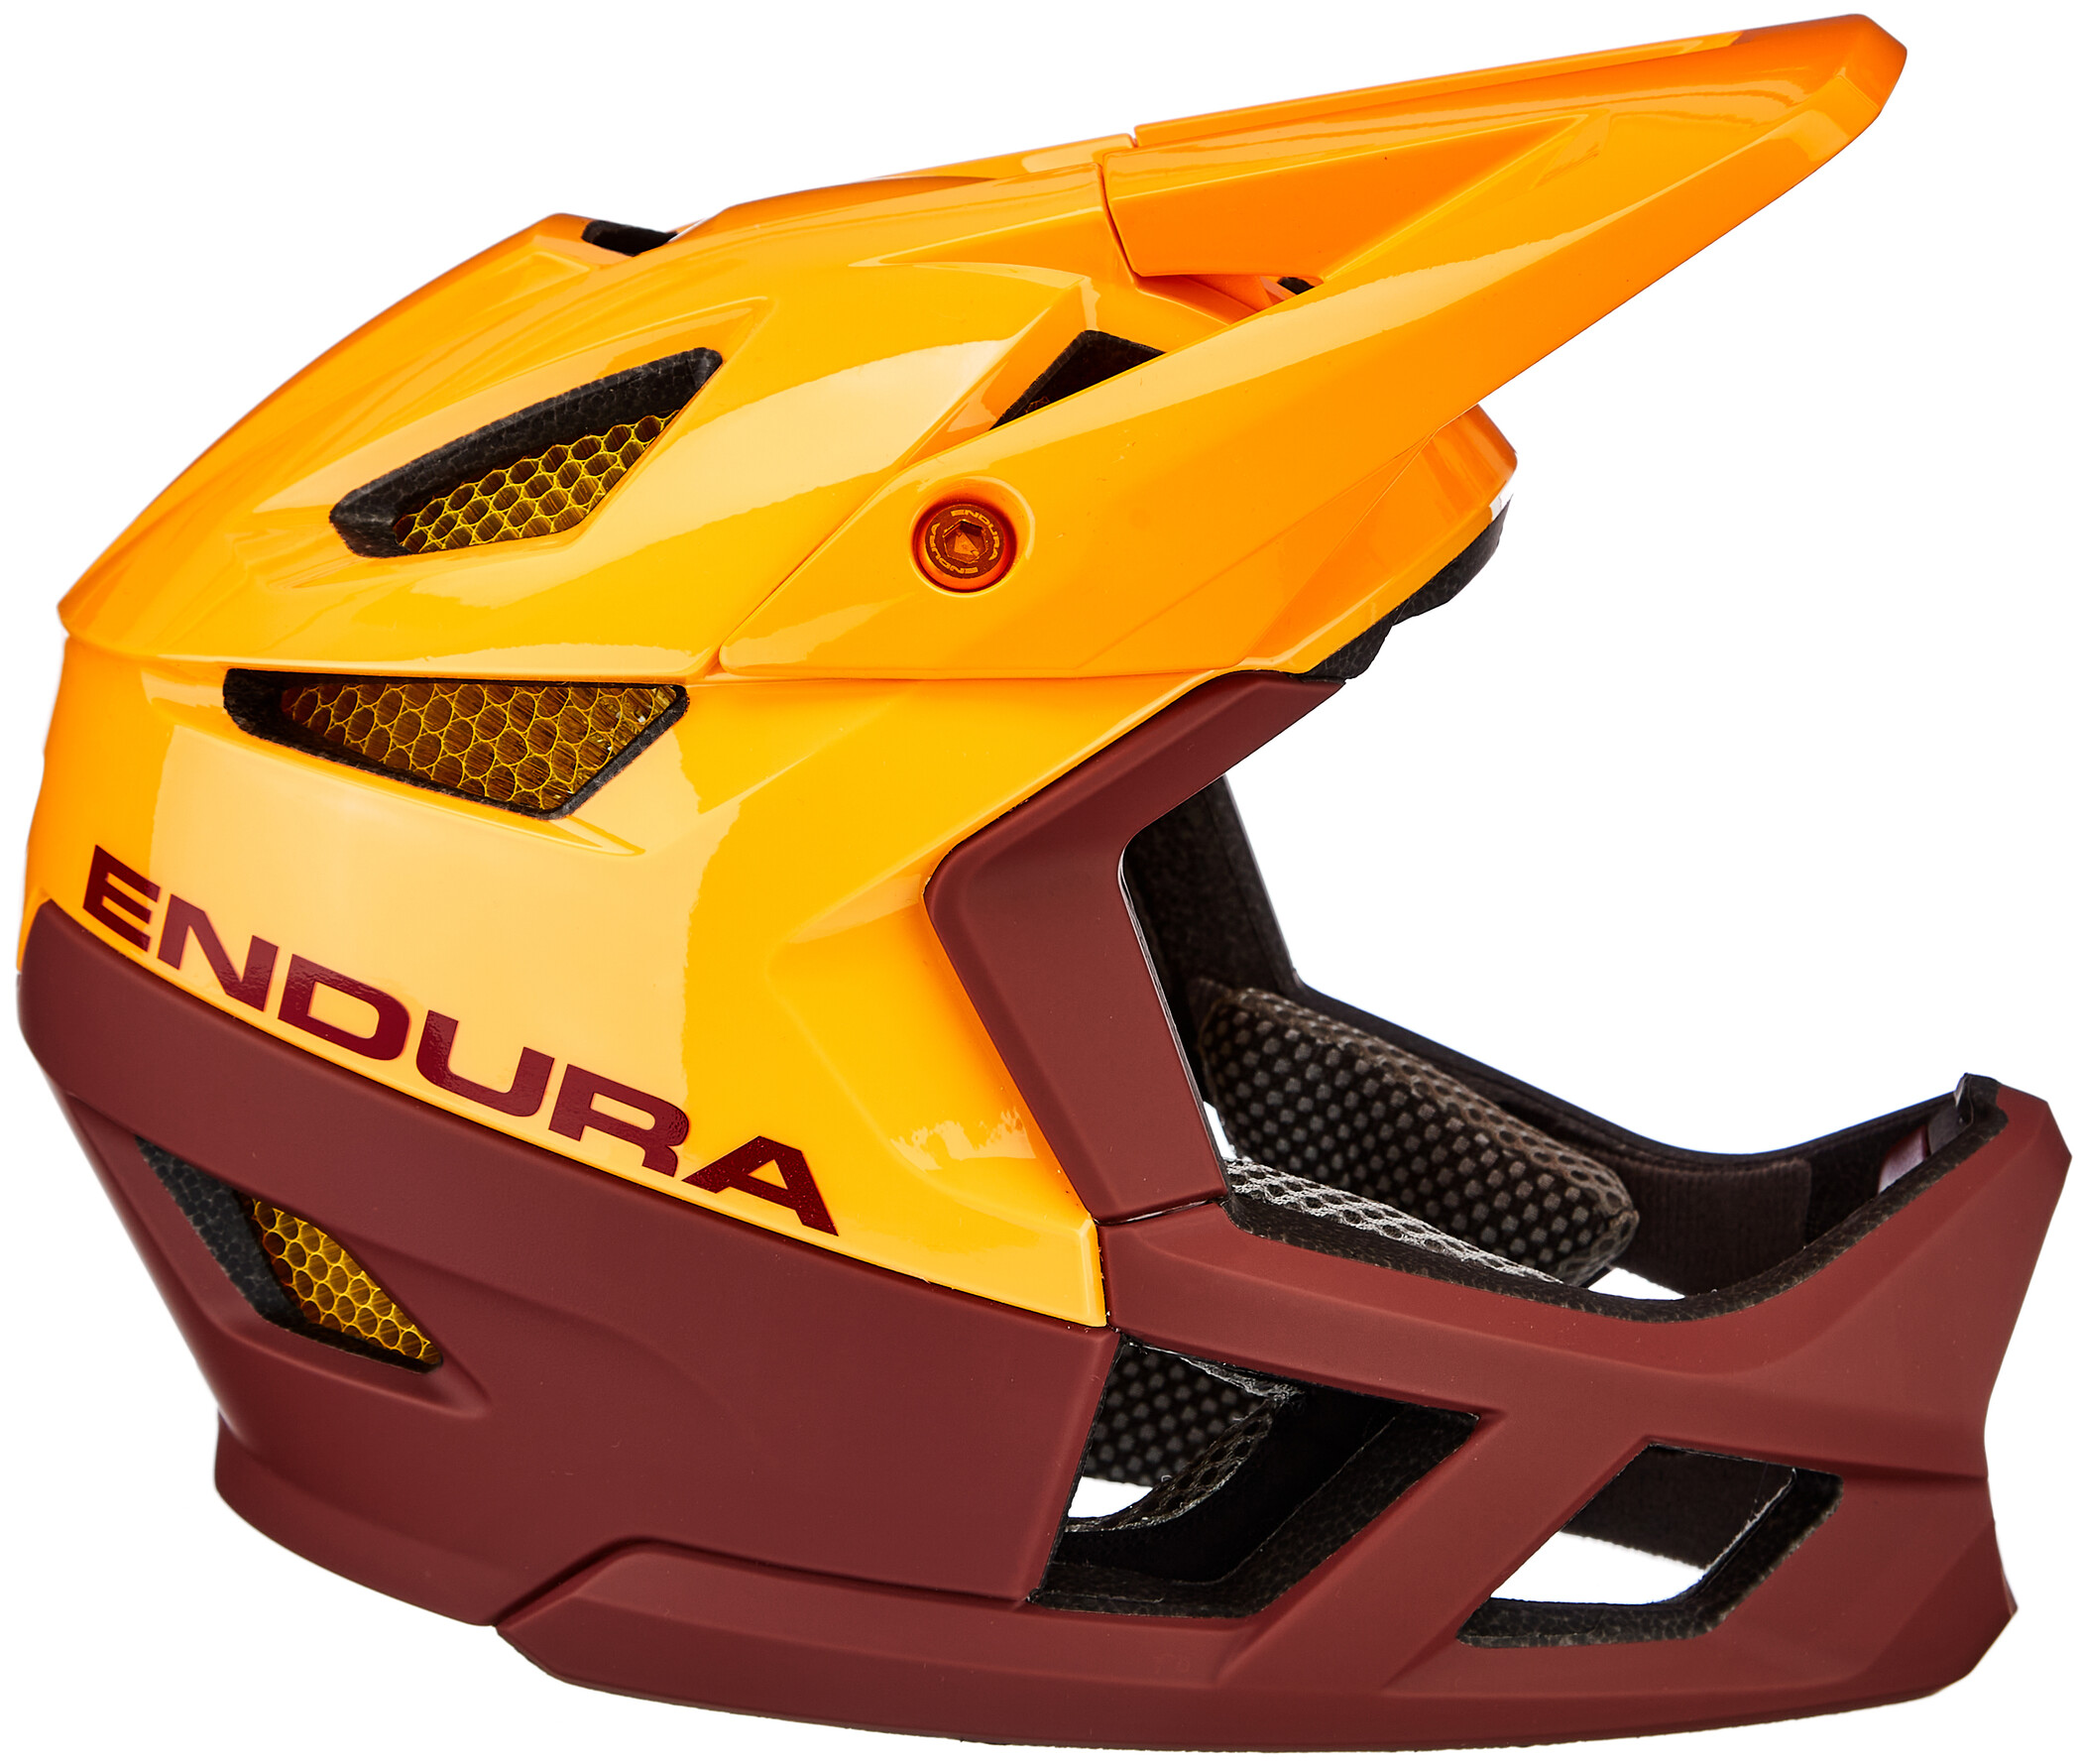 Endura MT500 Full-Face Helmet | バイク・自転車通販のProbikeshop